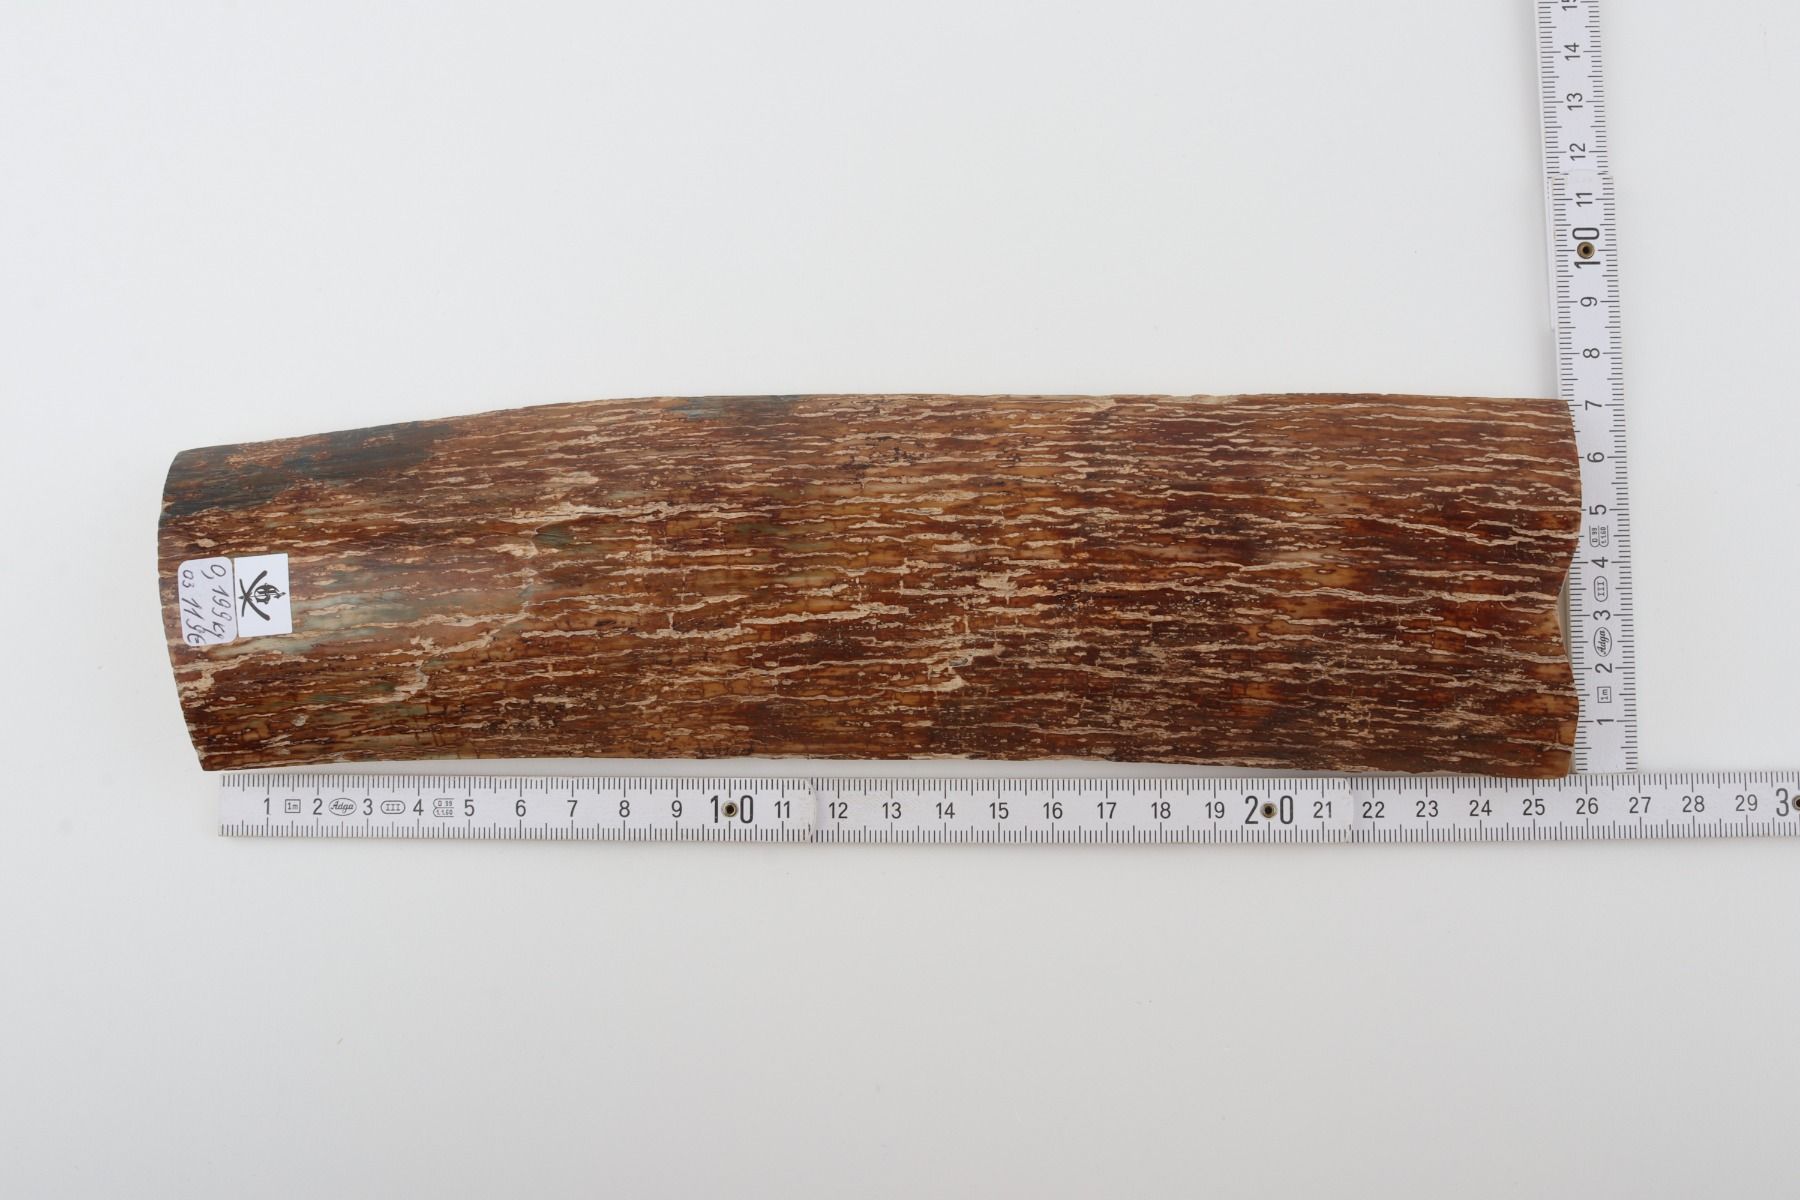 Caramel-brown mammoth bark